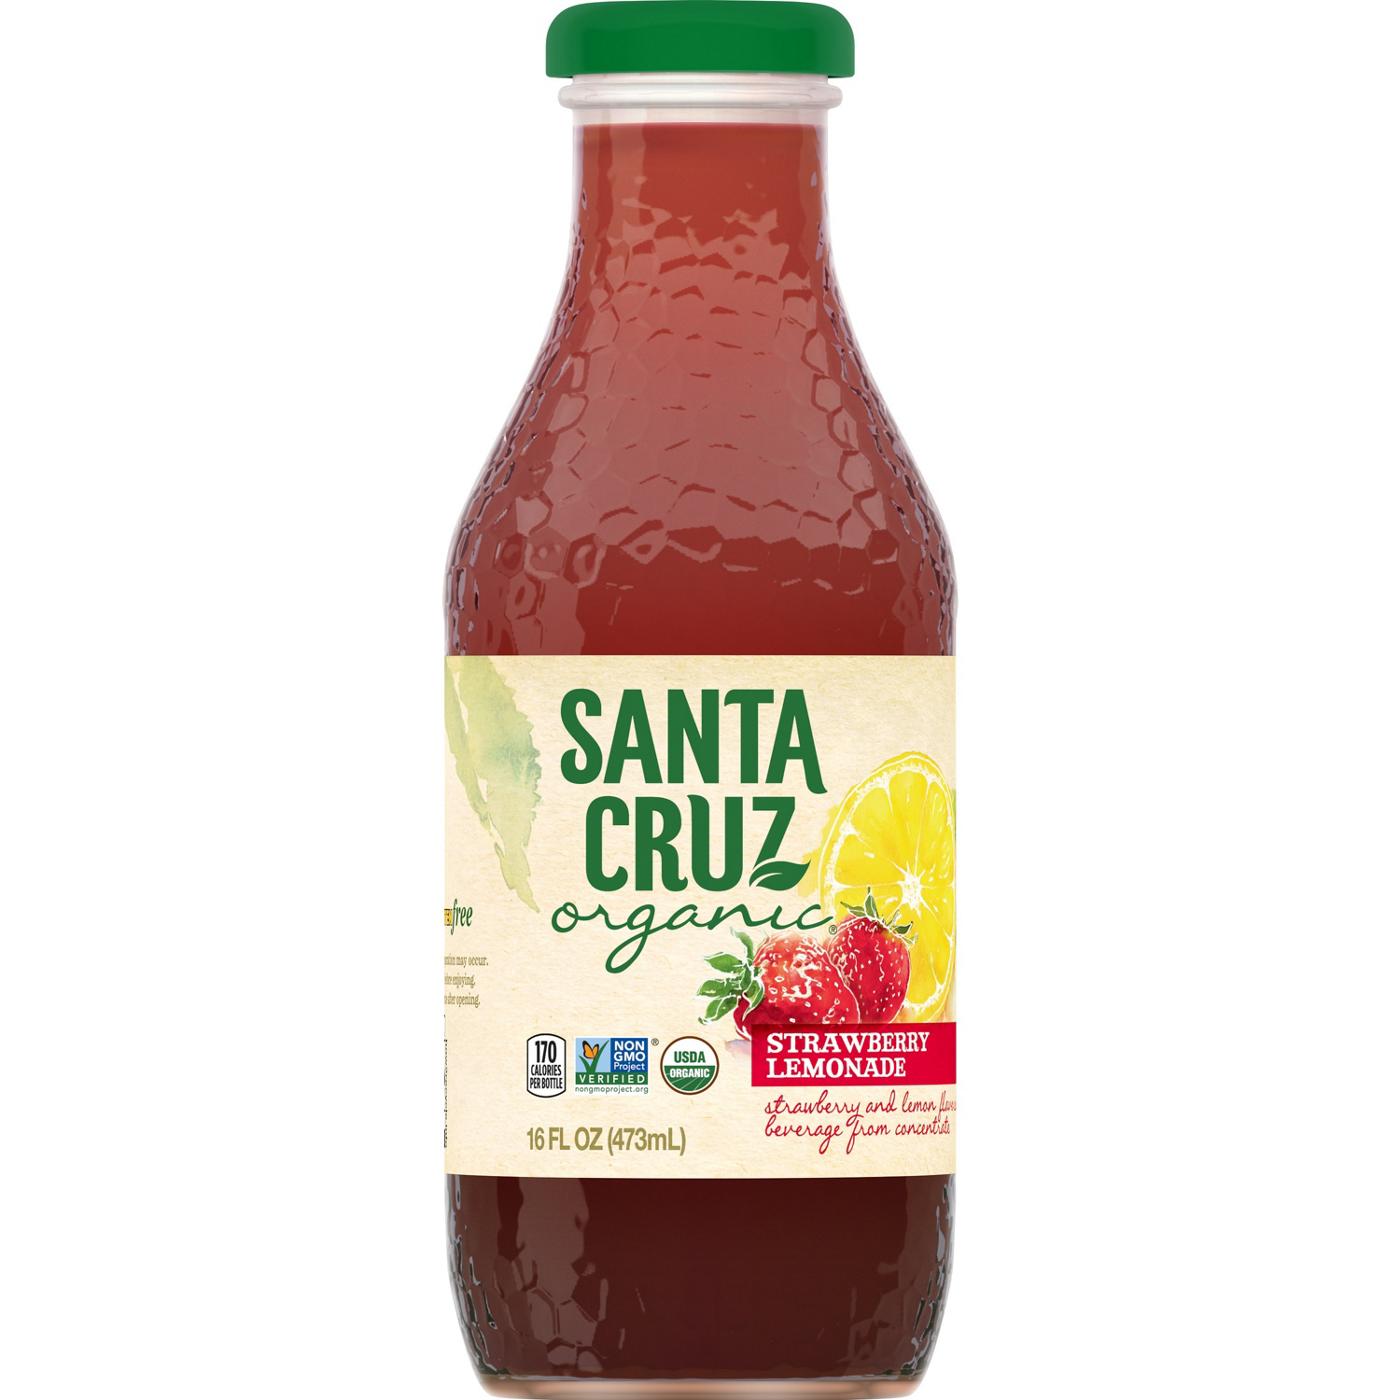 Santa Cruz Organic Strawberry Lemonade Beverage; image 1 of 4